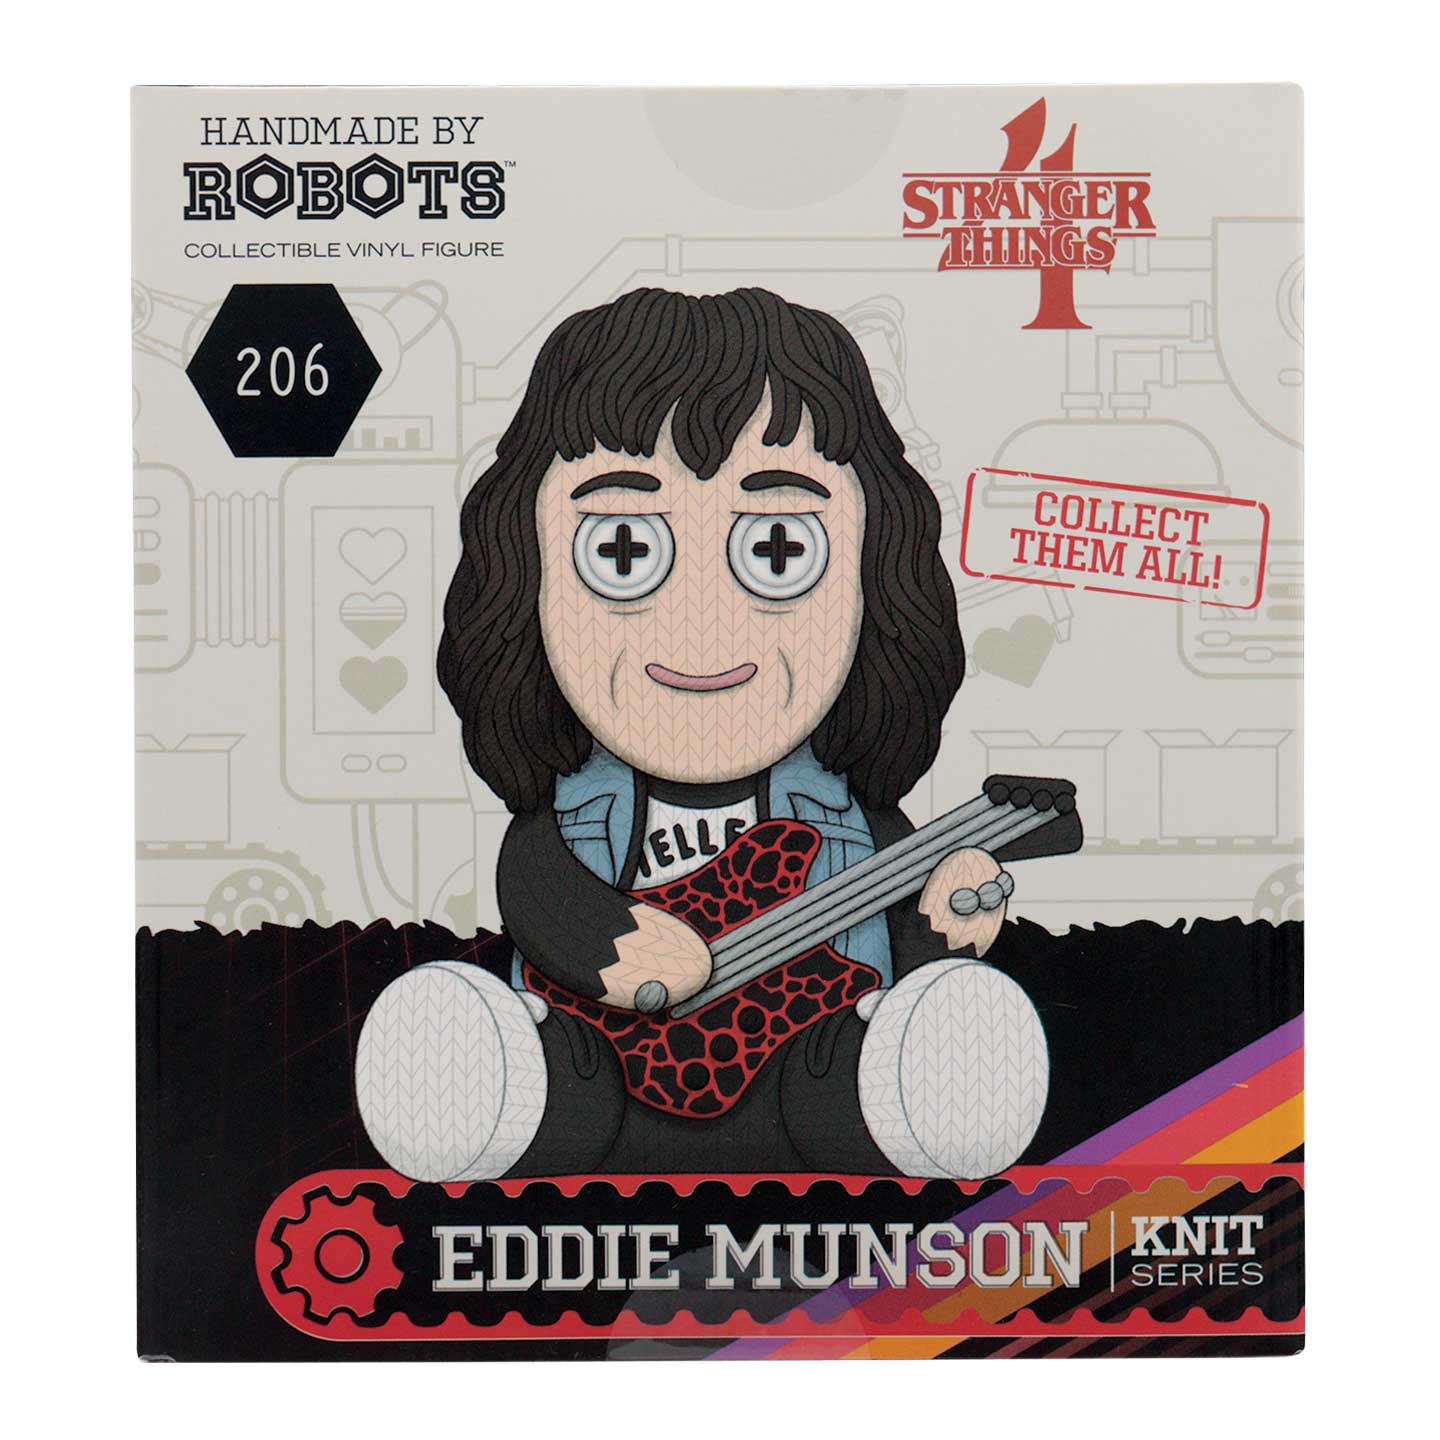 Stranger Things Eddie Munson Vinyl Figure from Handmade by Robots